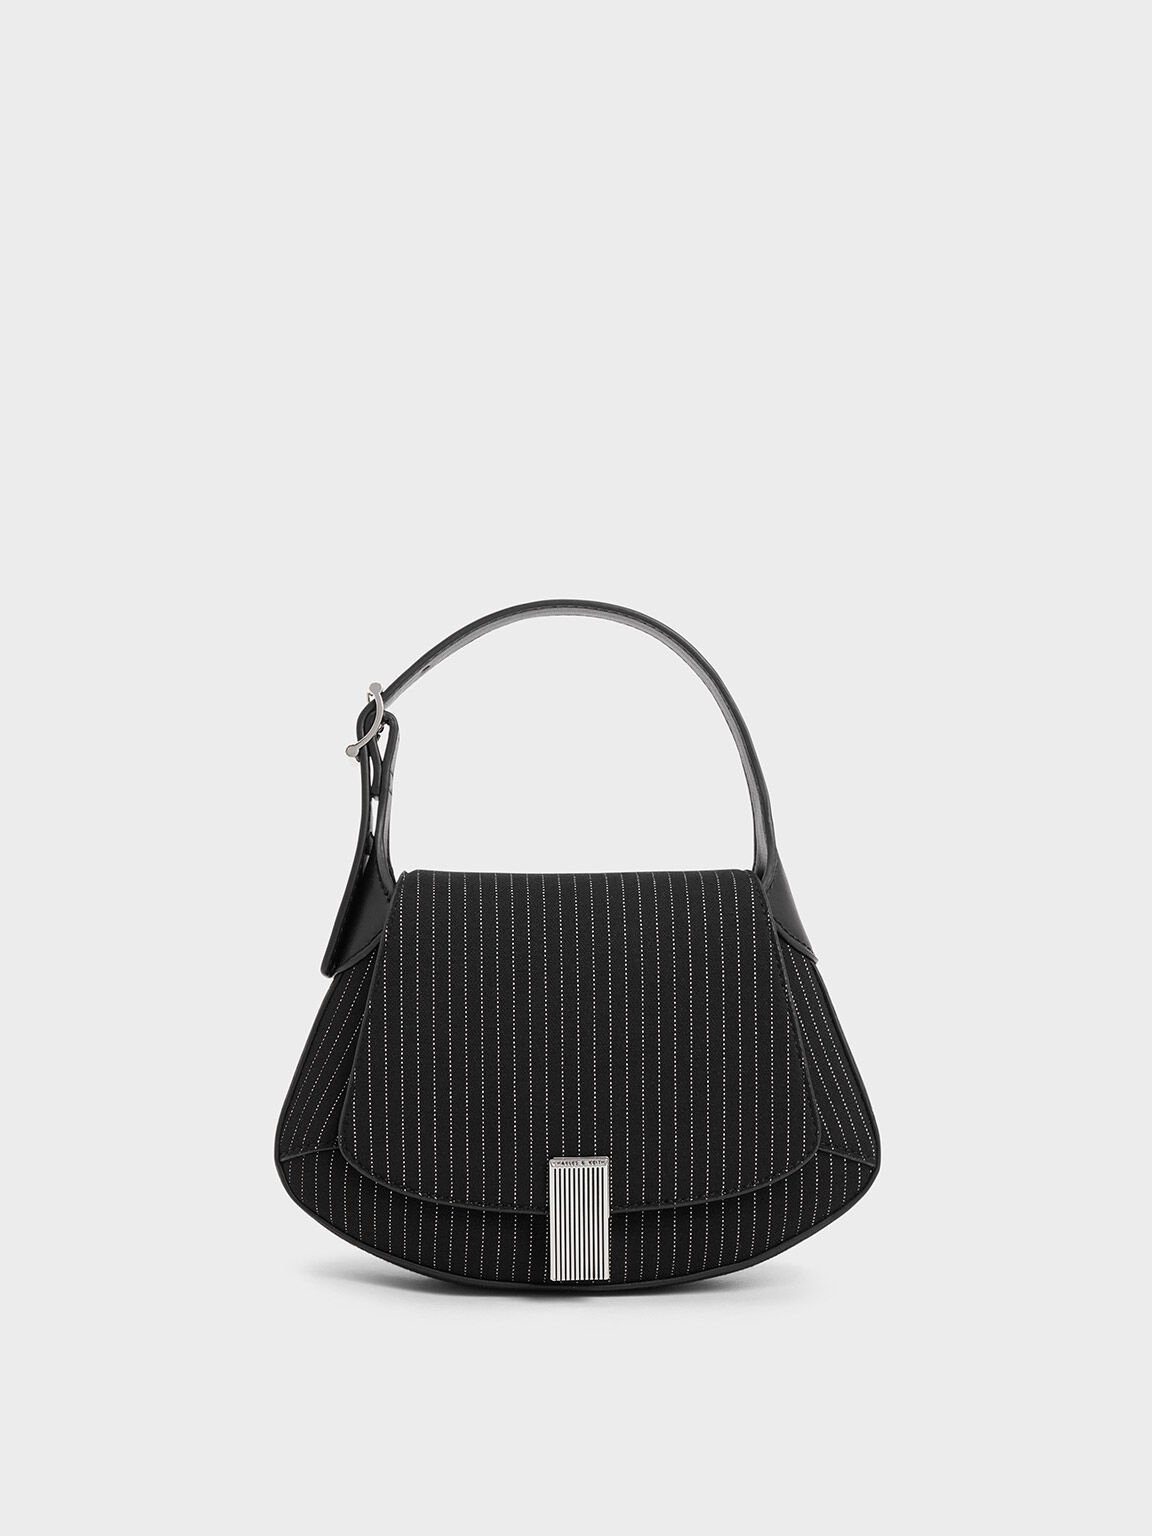 Shoppers Say This $22 Saddle Shoulder Bag Looks Just Like a Popular Designer  Style